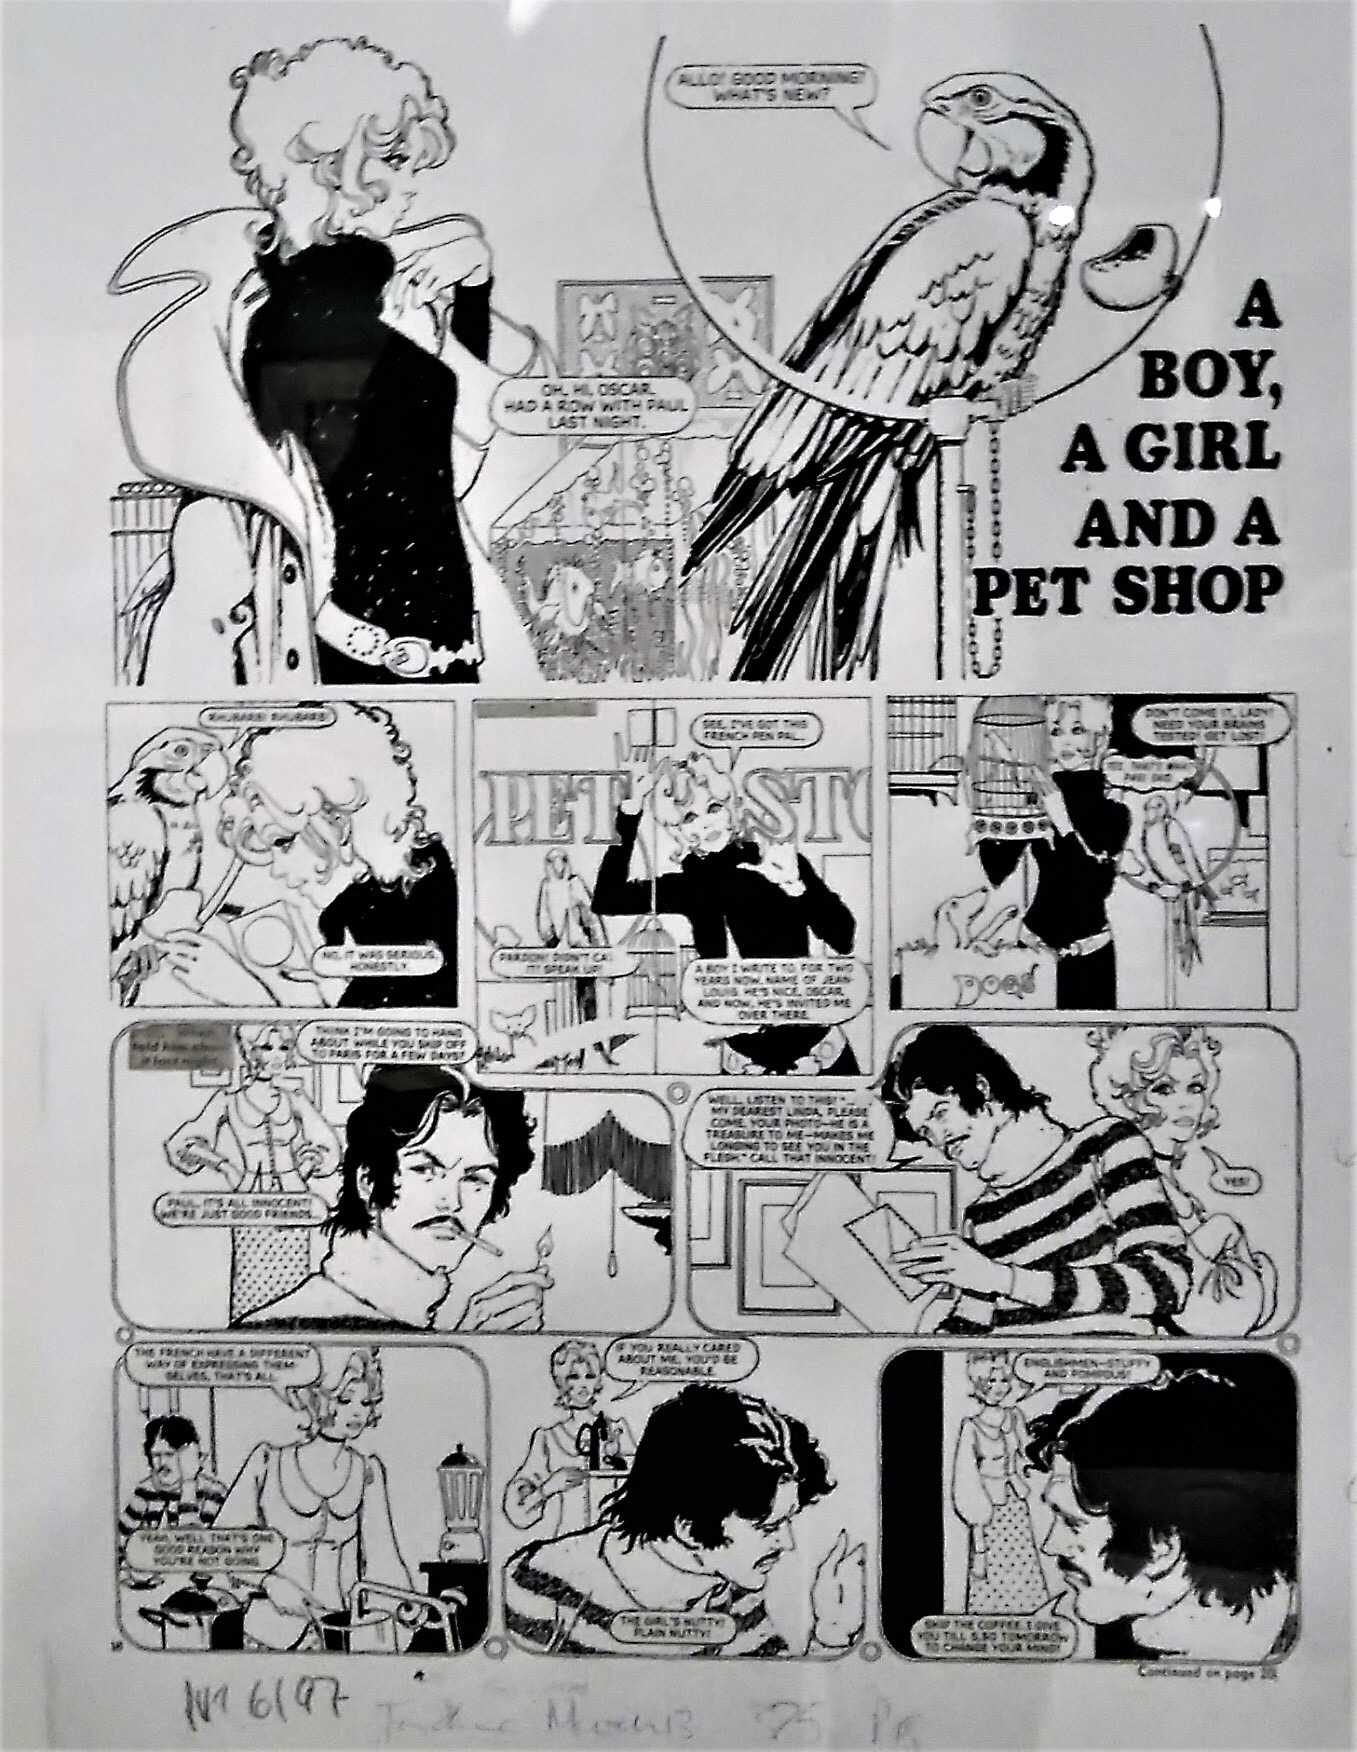 "A Boy, a Girl and a Pet Shop"